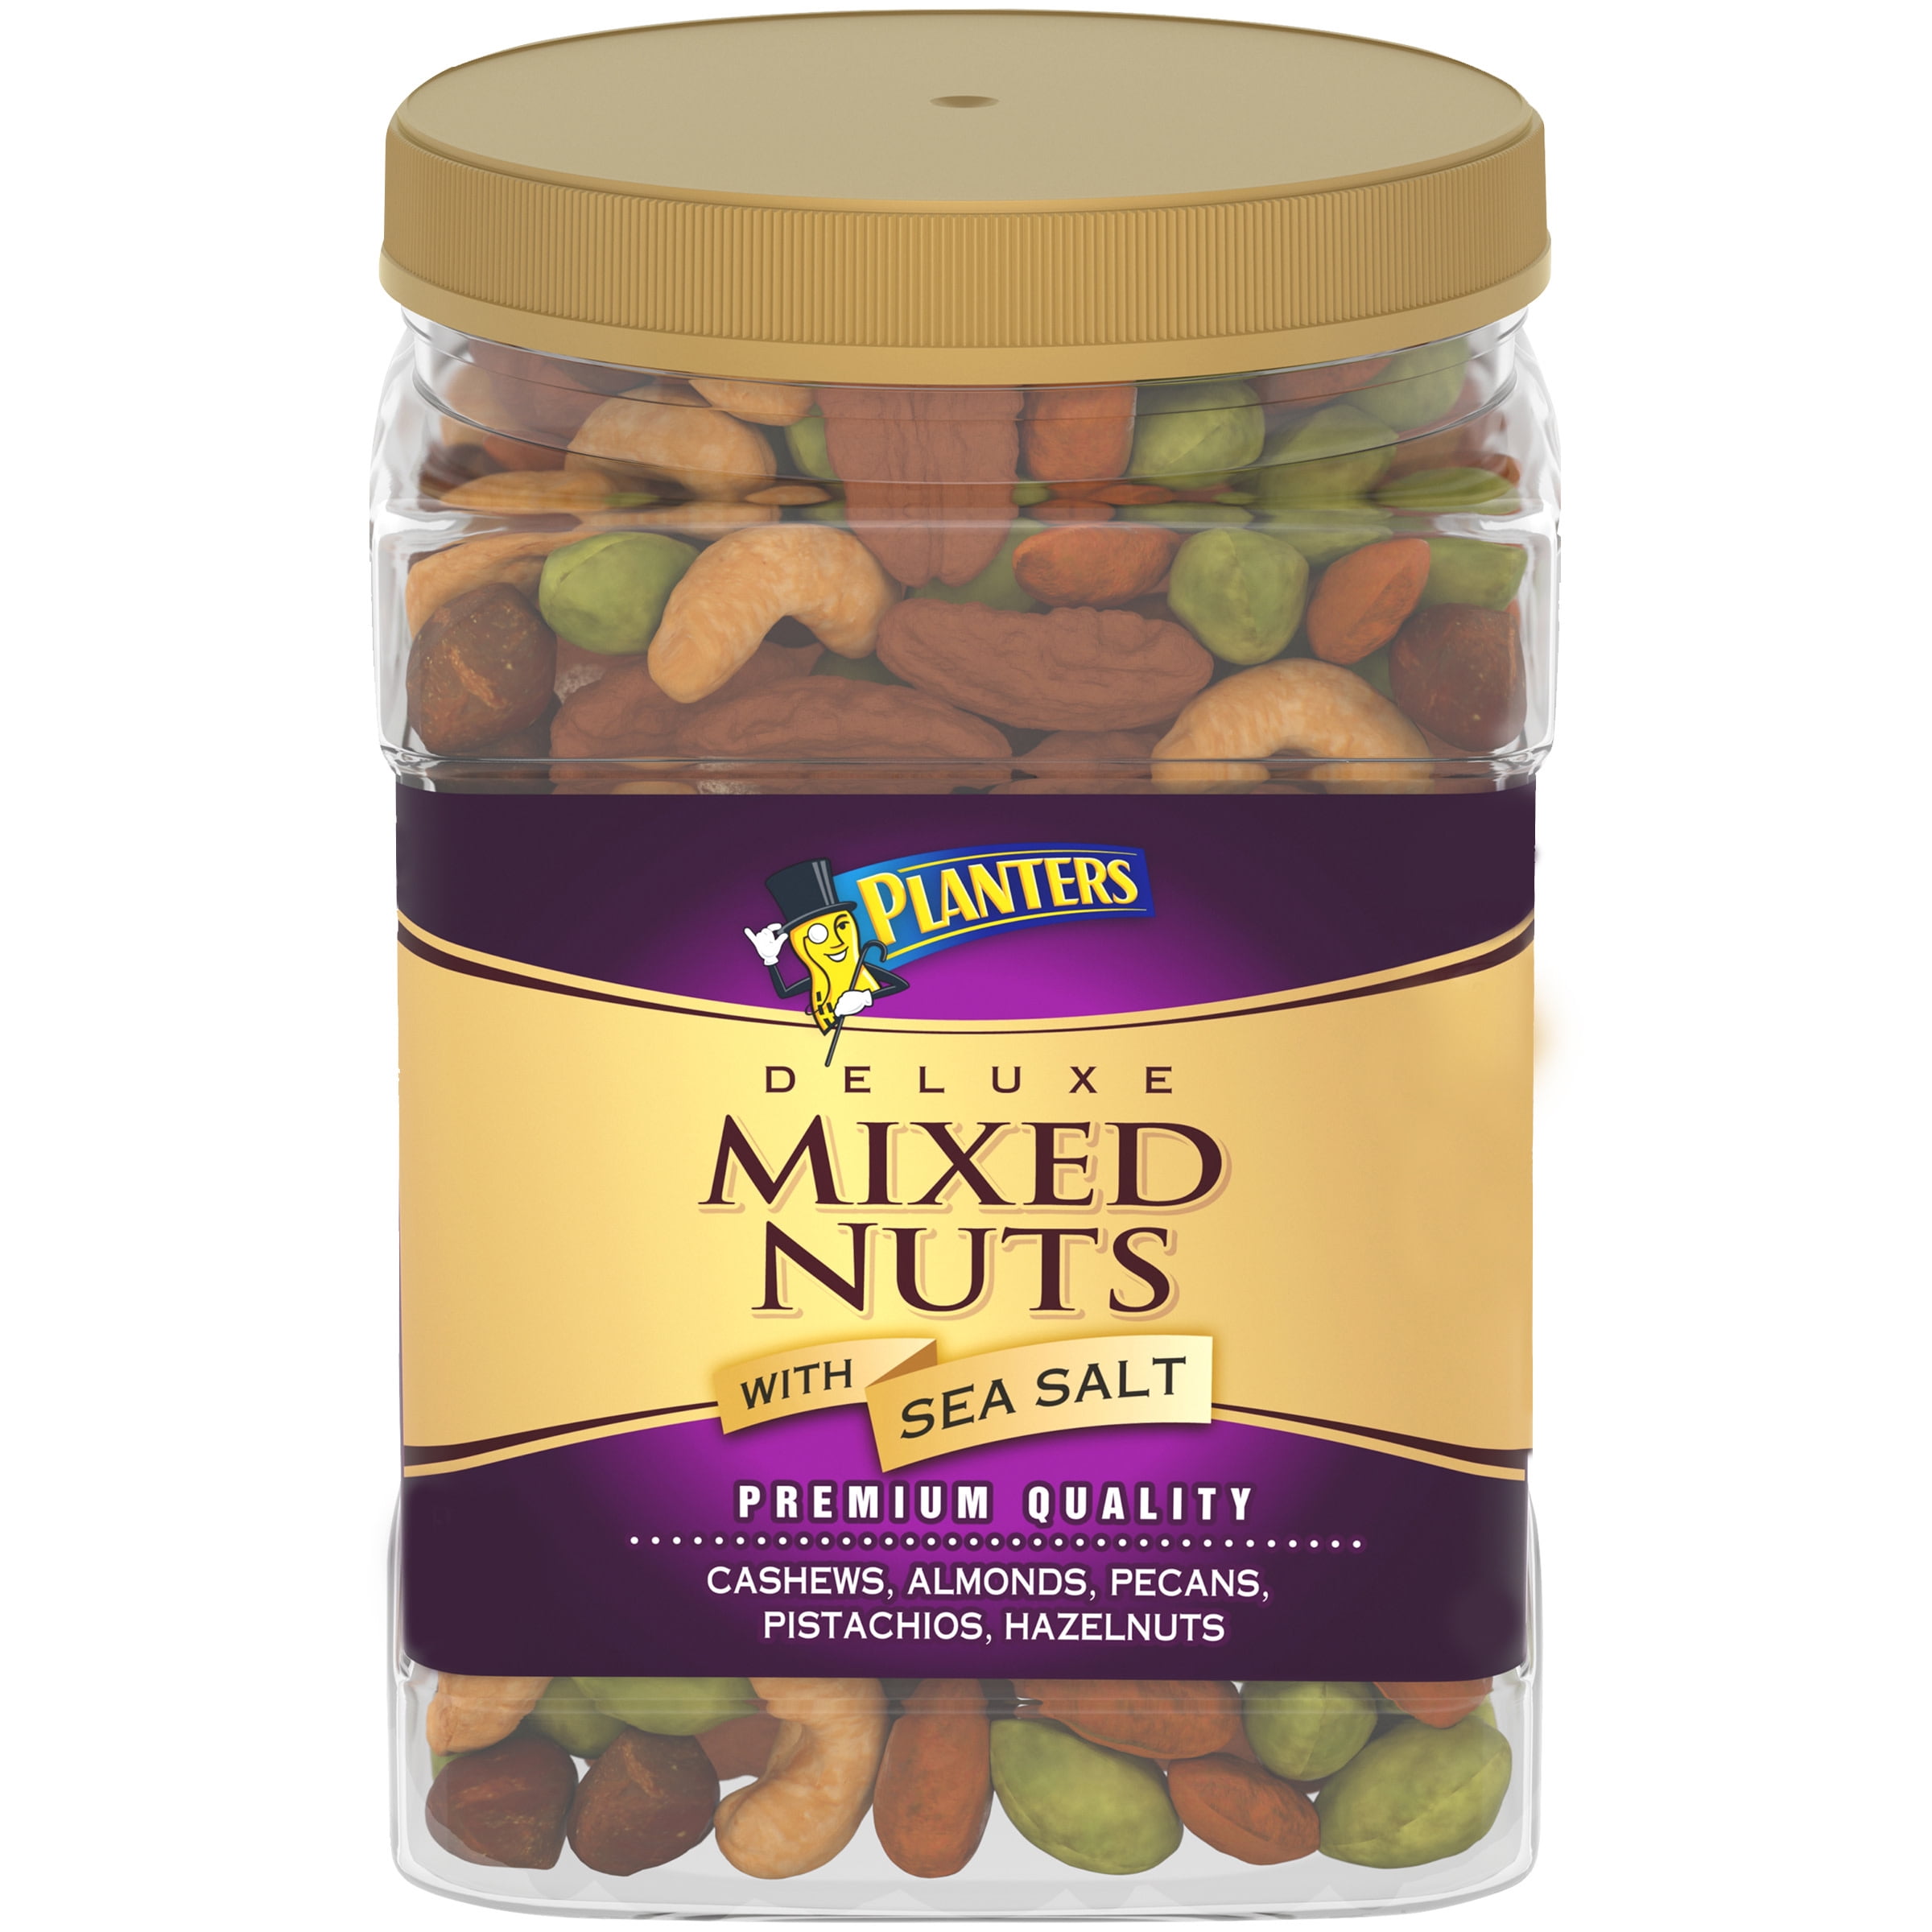 Planters Deluxe Mixed Nuts with Cashews, Almonds, Pecans, Pistachios, Hazelnuts & Sea Salt, 2.13 lb Container